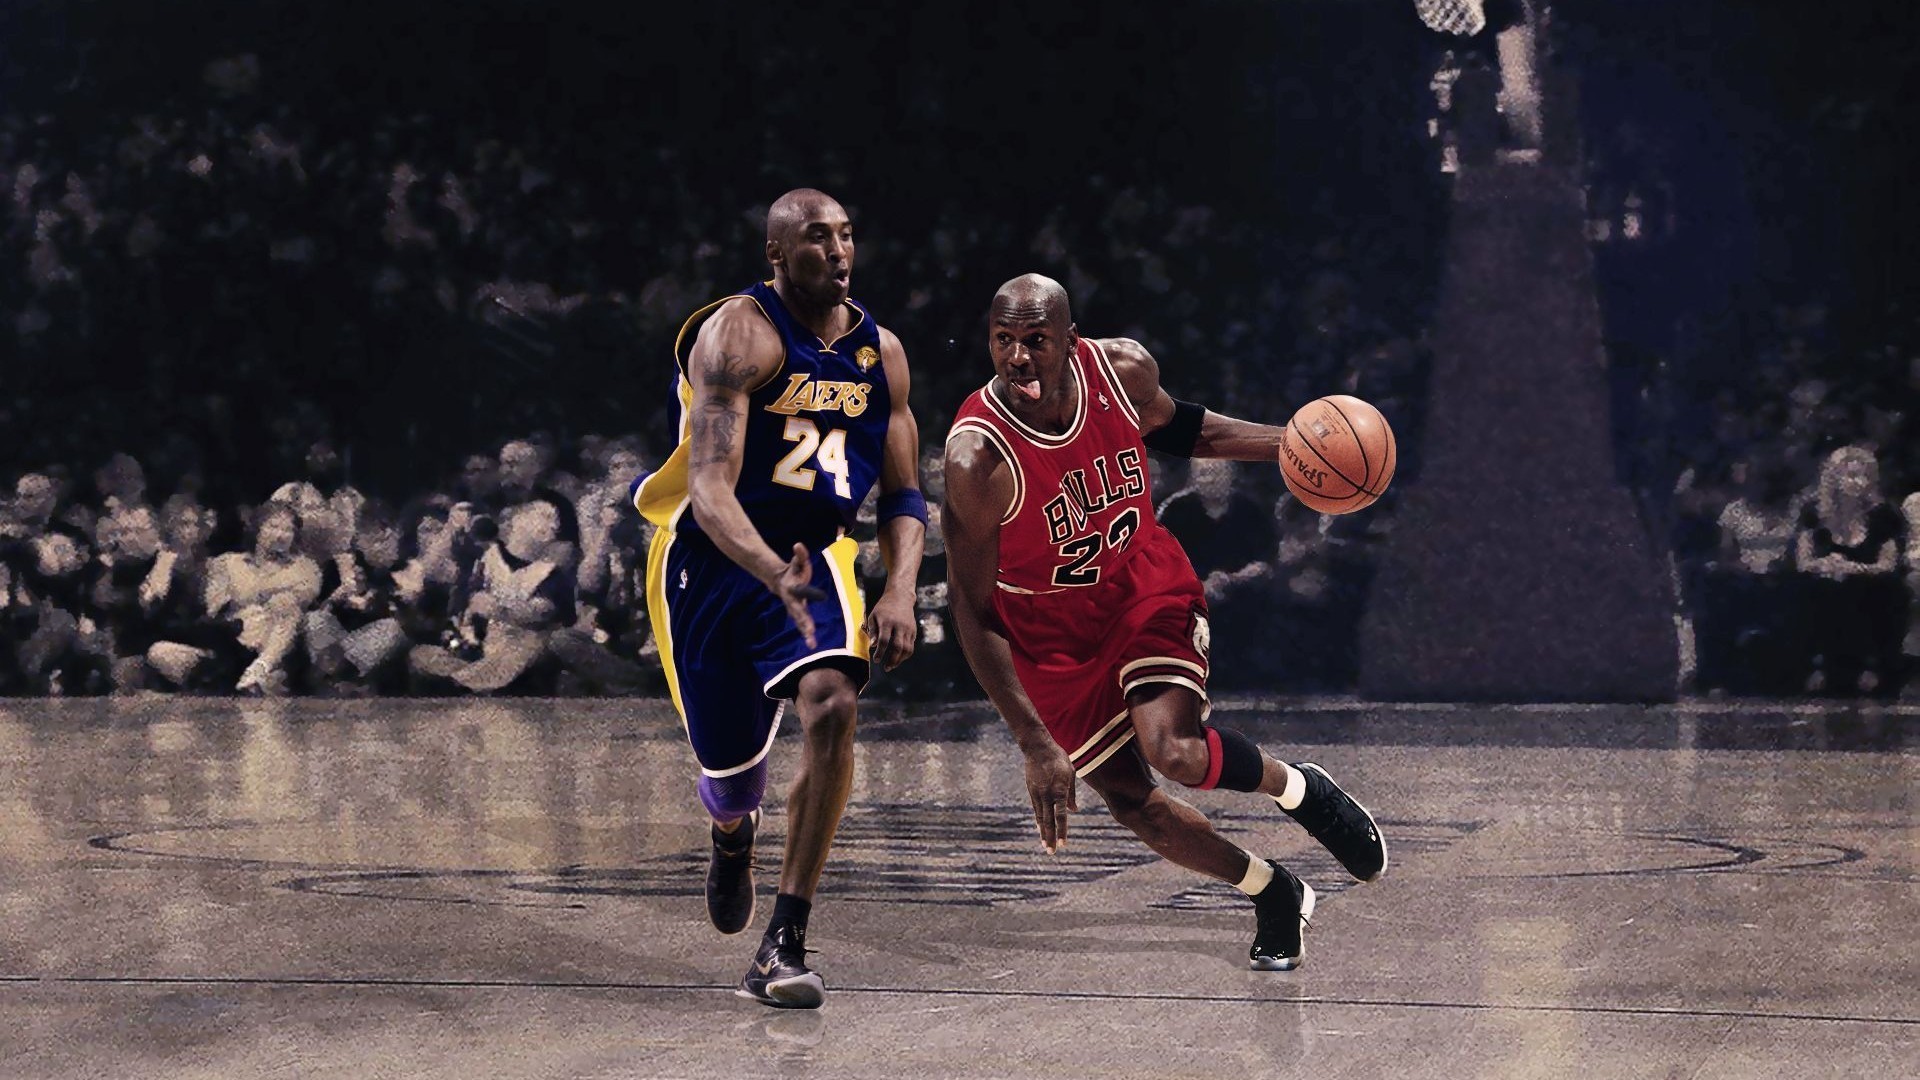 Nike Basketball Wallpaper Images